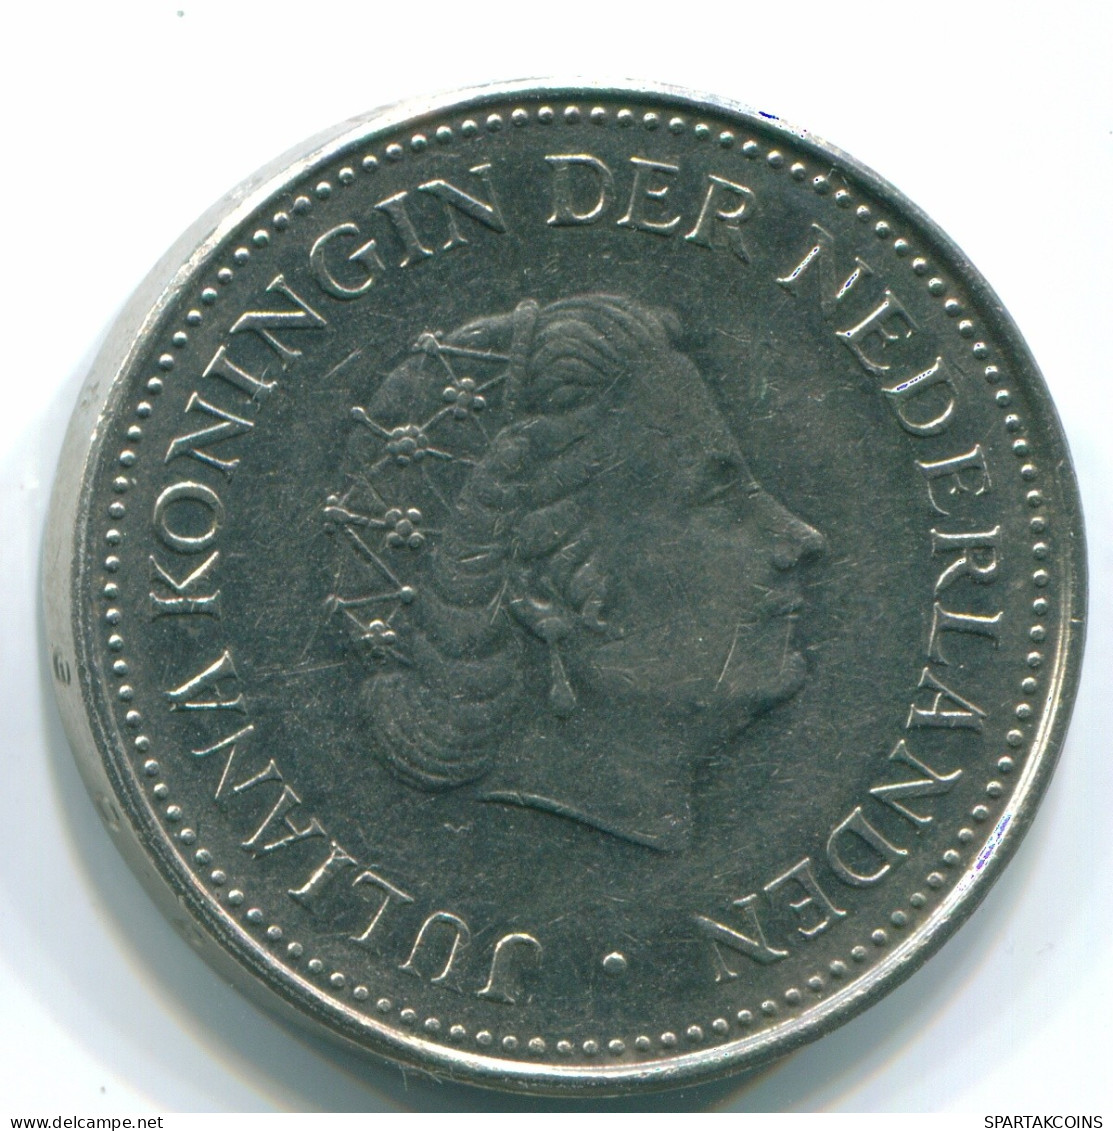 1 GULDEN 1971 NIEDERLÄNDISCHE ANTILLEN Nickel Koloniale Münze #S12013.D.A - Antilles Néerlandaises